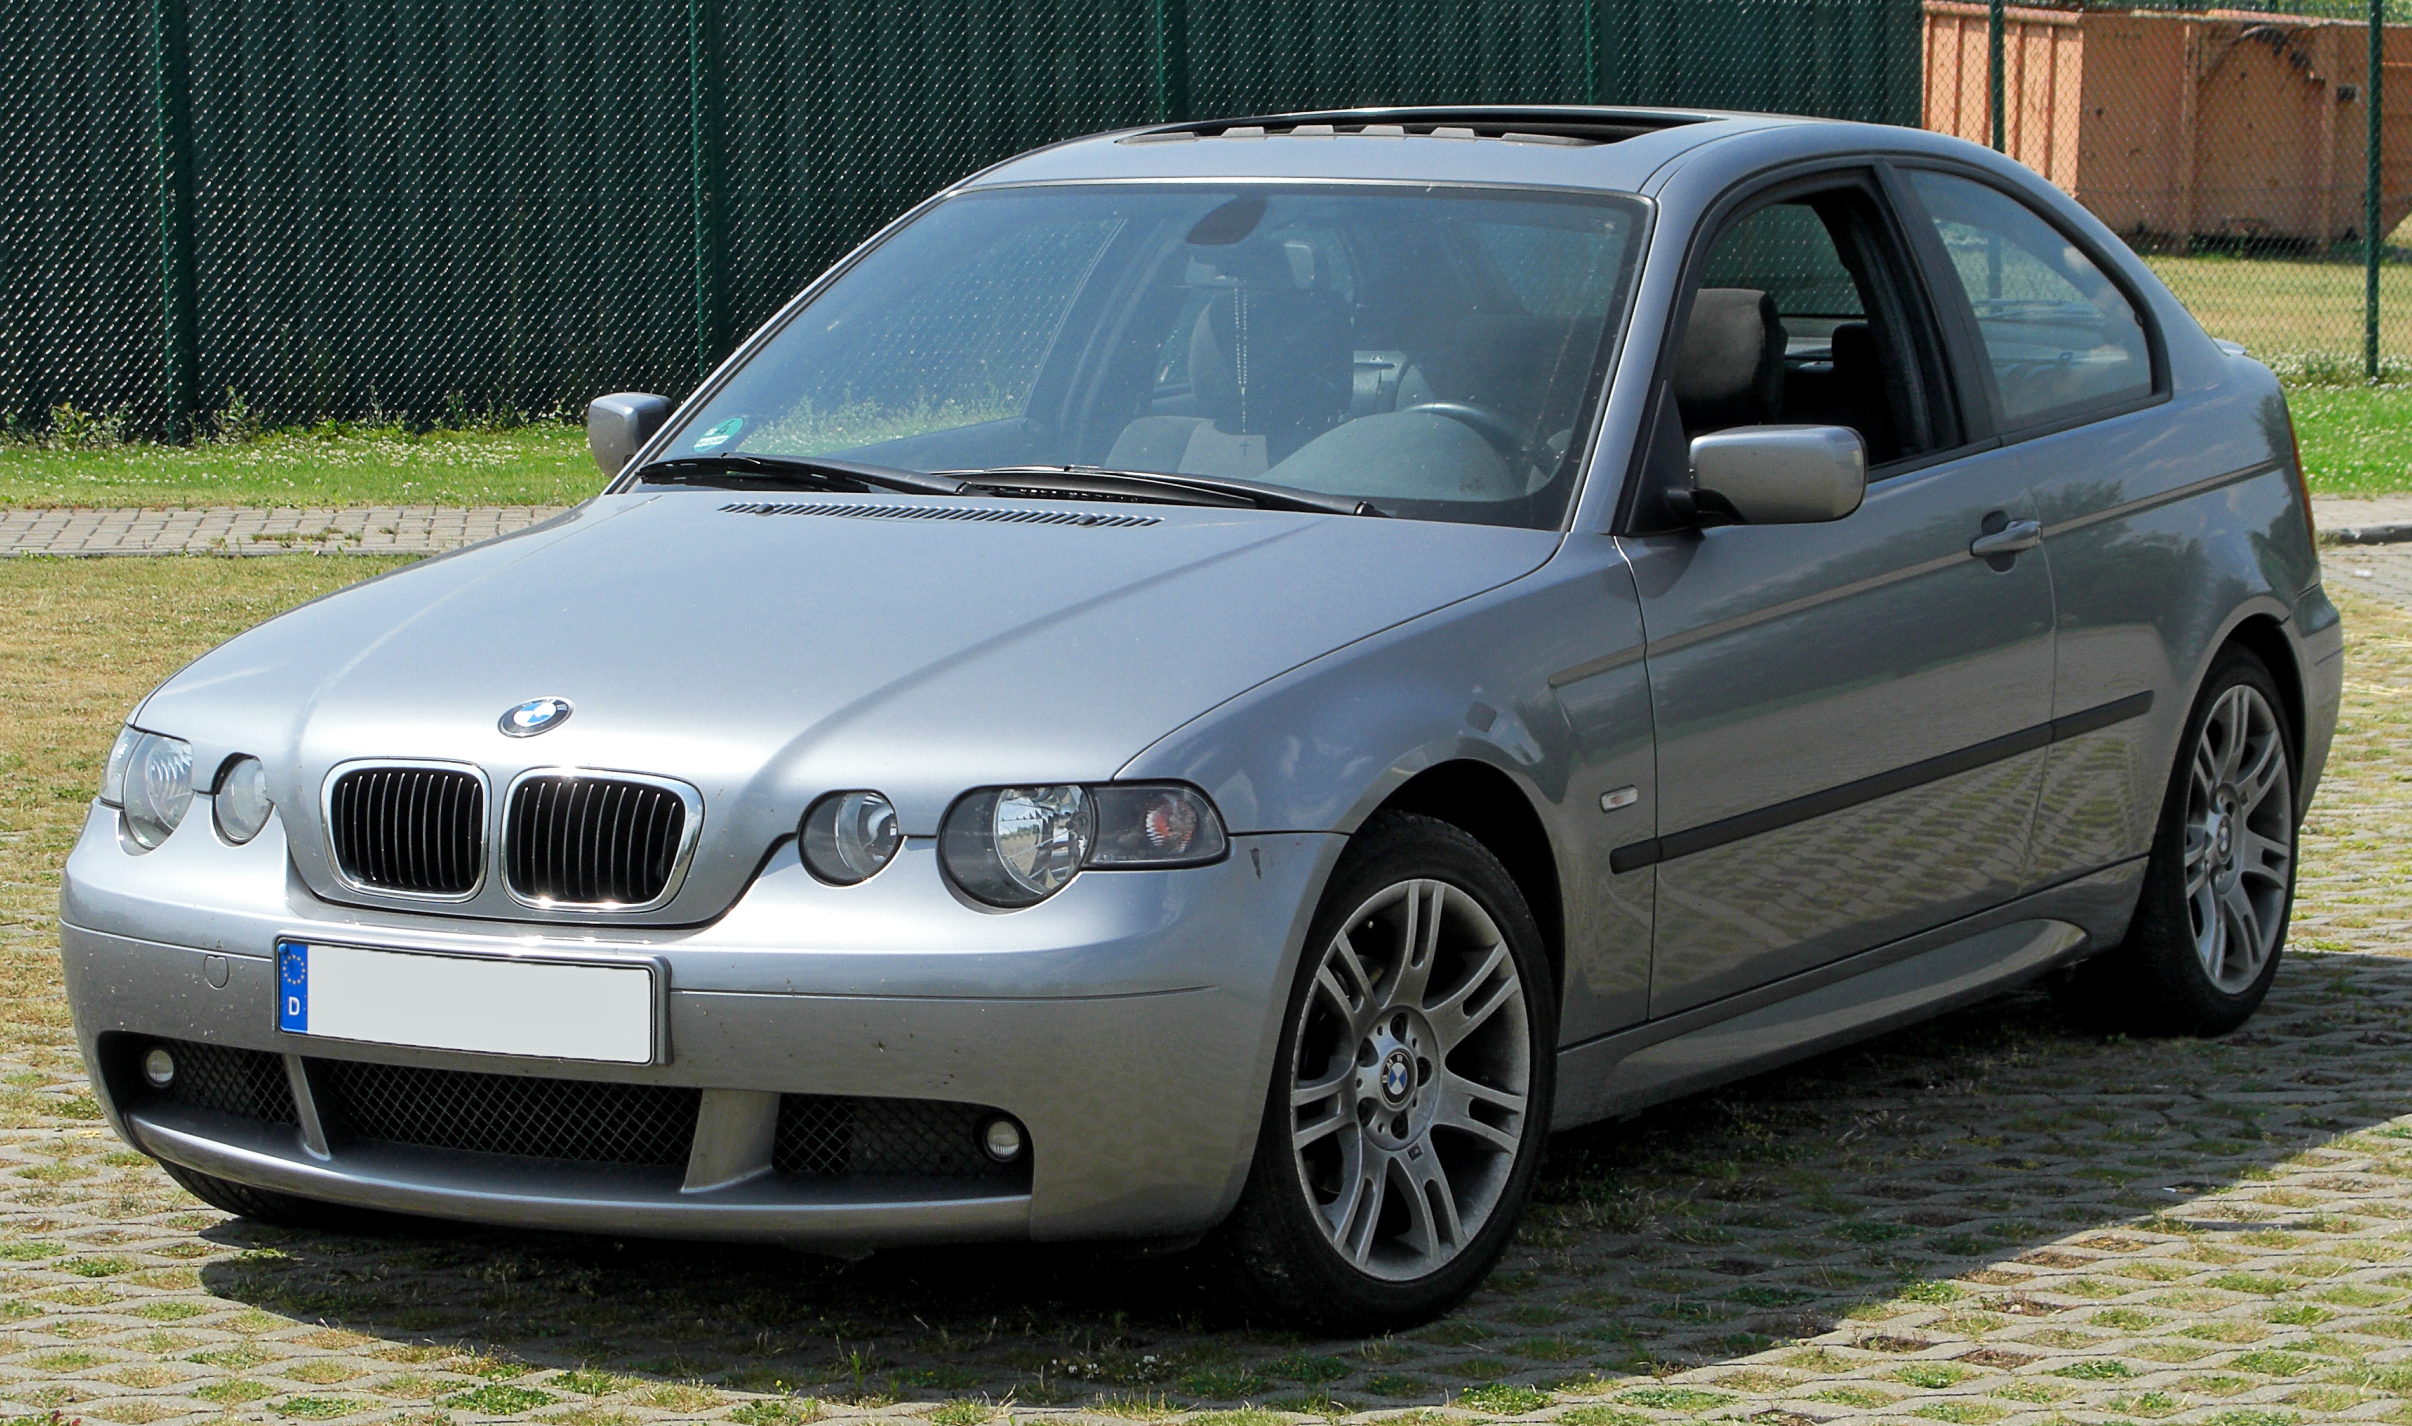 BMW 316ti Compact A